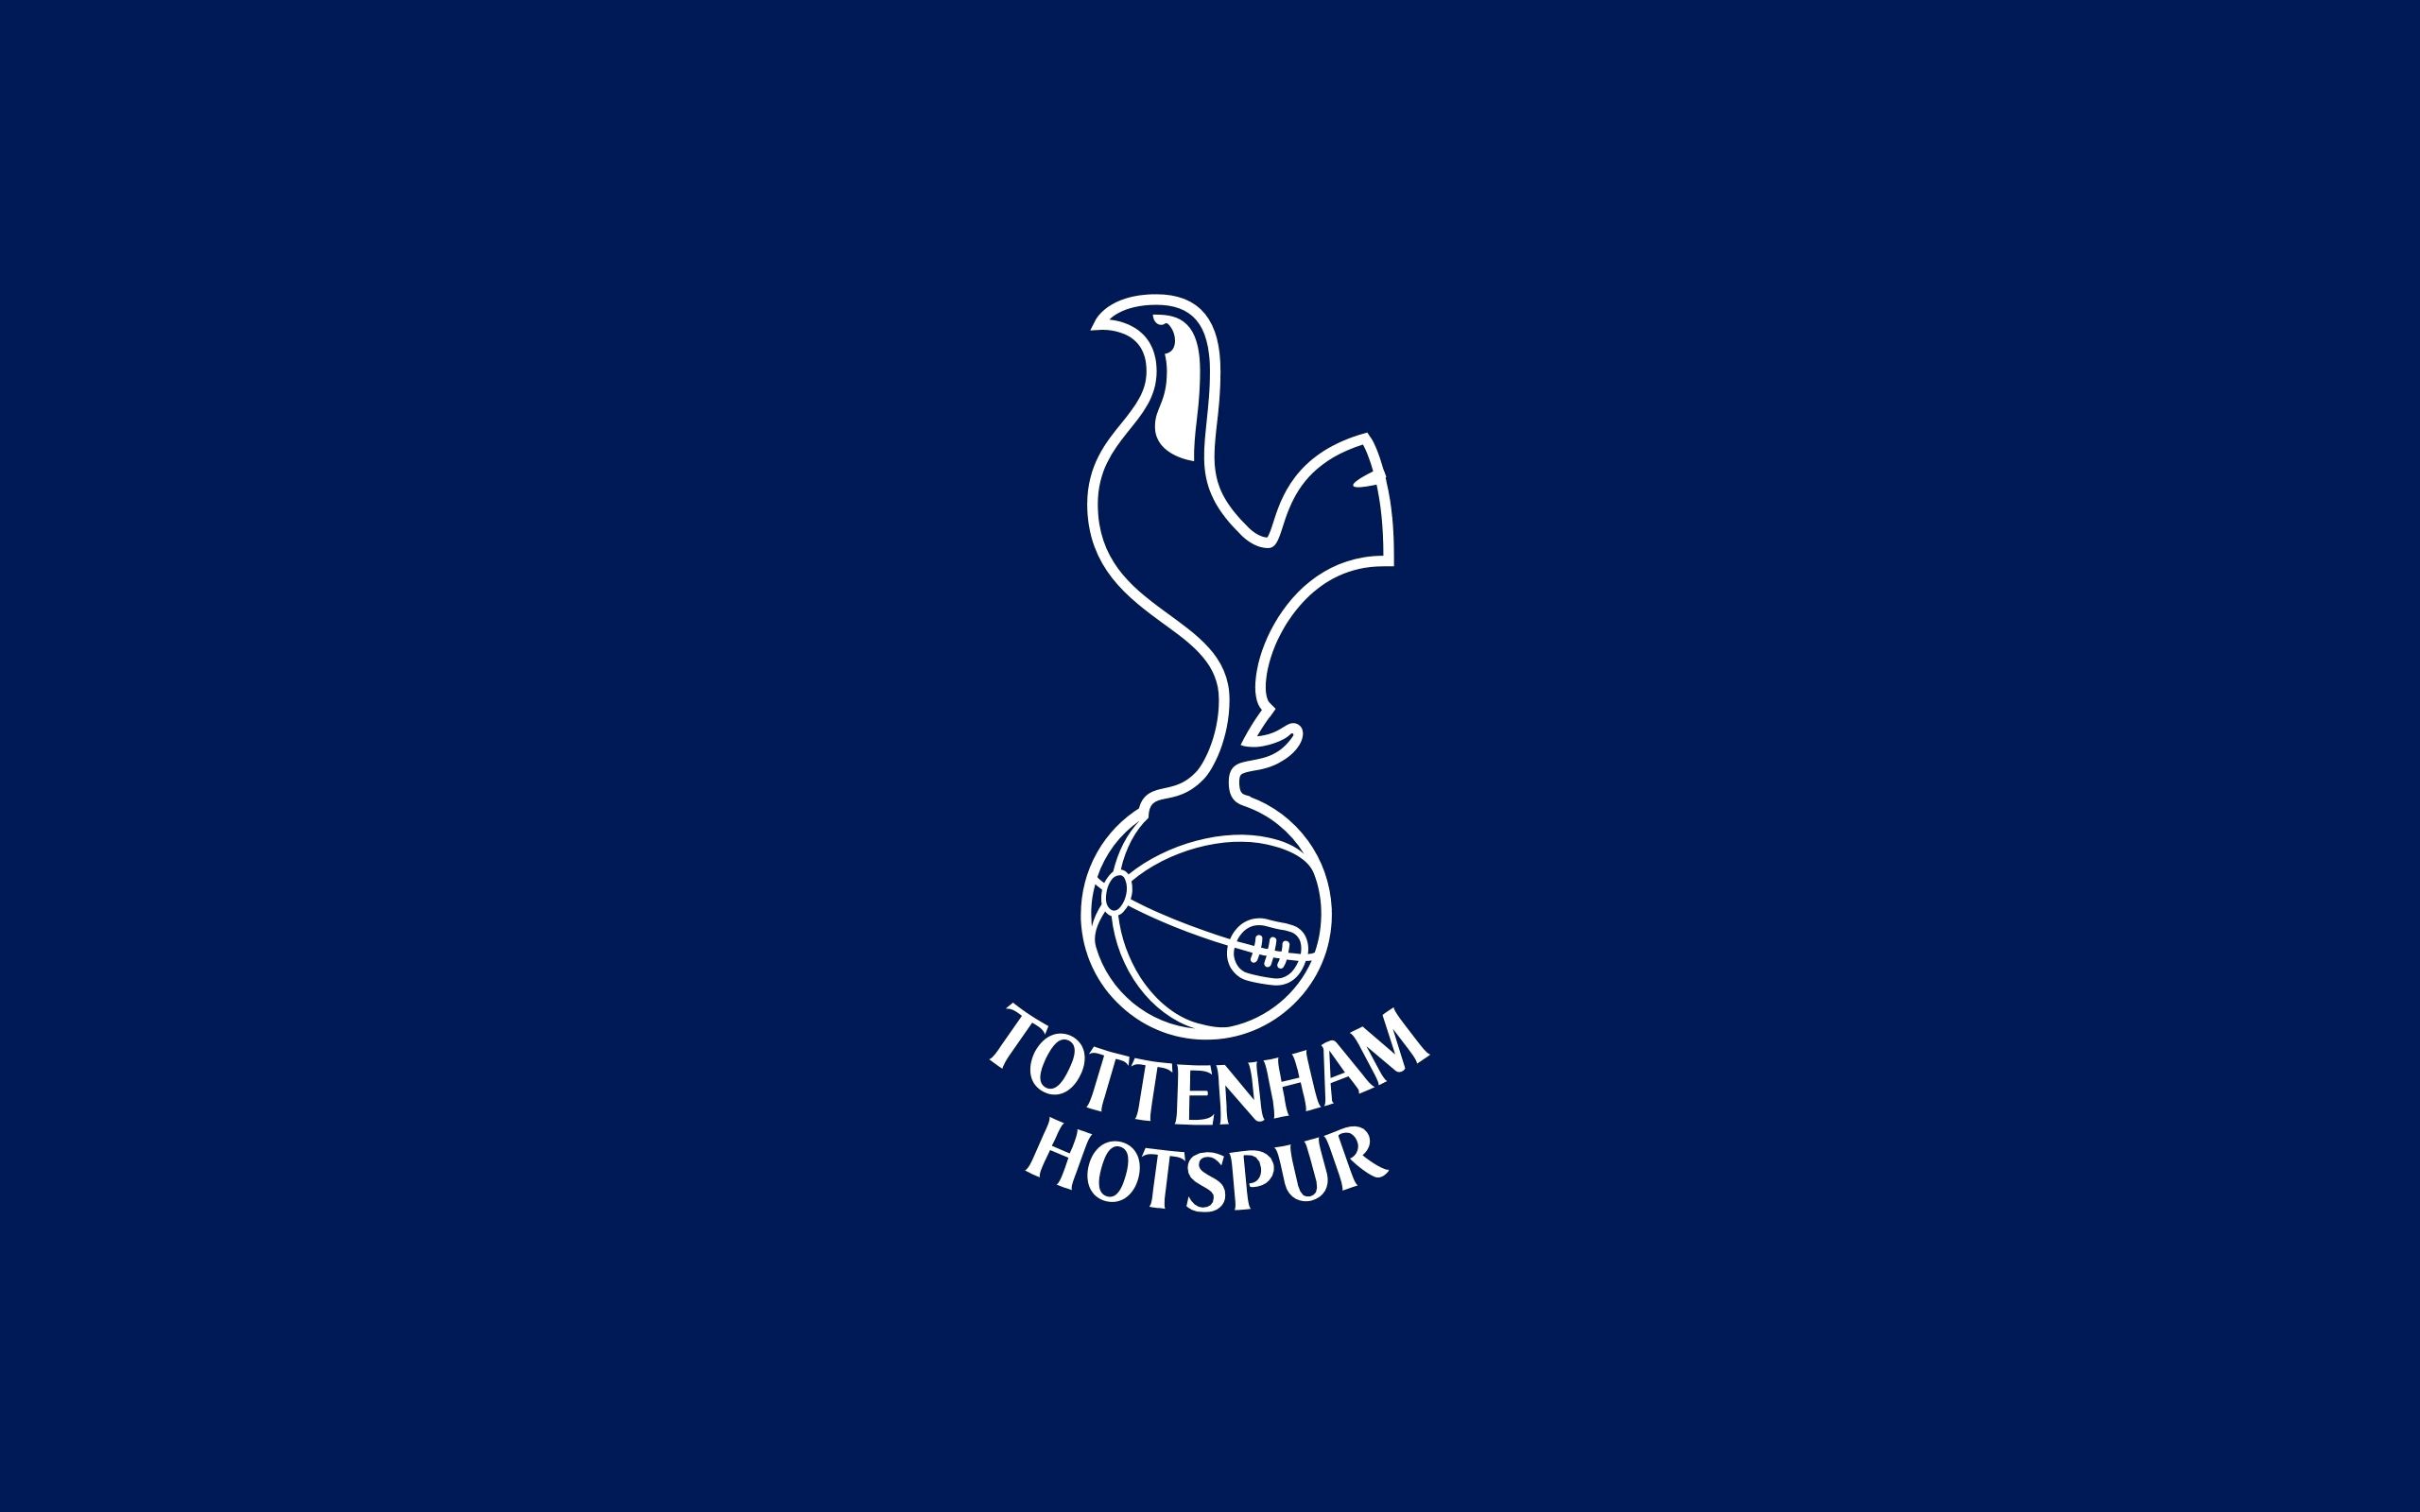 Télécharger des fonds d'écran Tottenham Hotspur HD